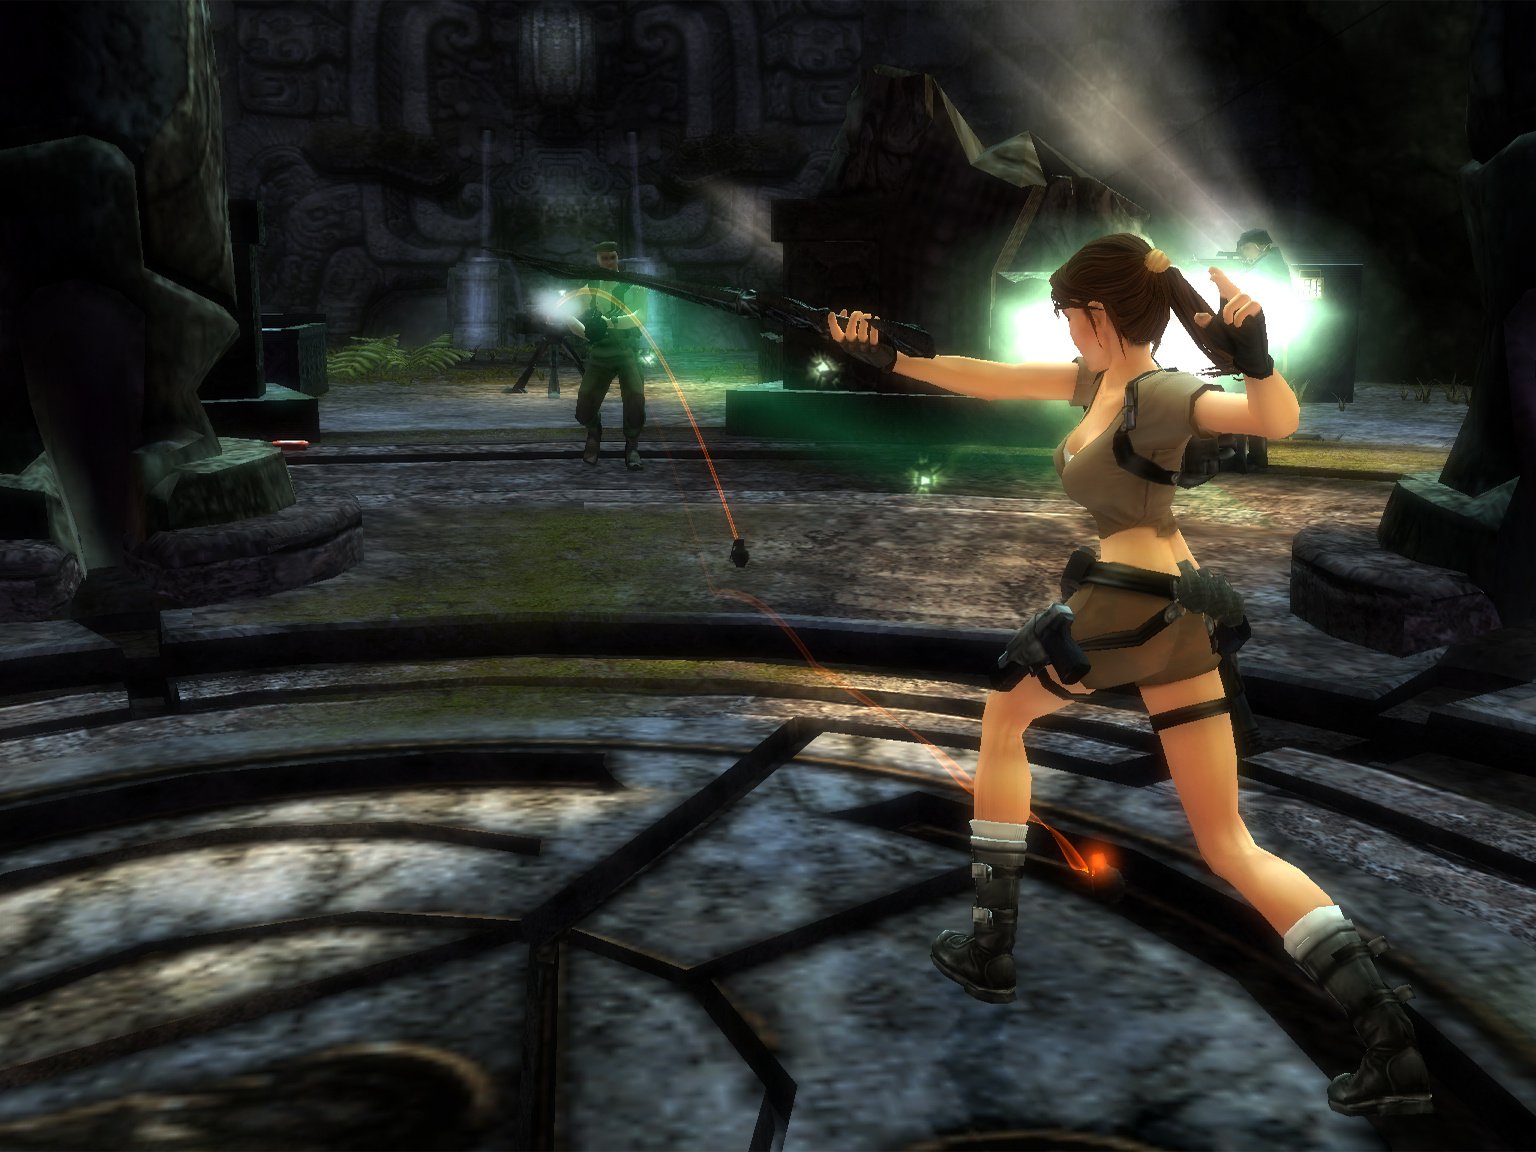 Amazoncom: Tomb Raider Underworld: Nintendo DS: Artist